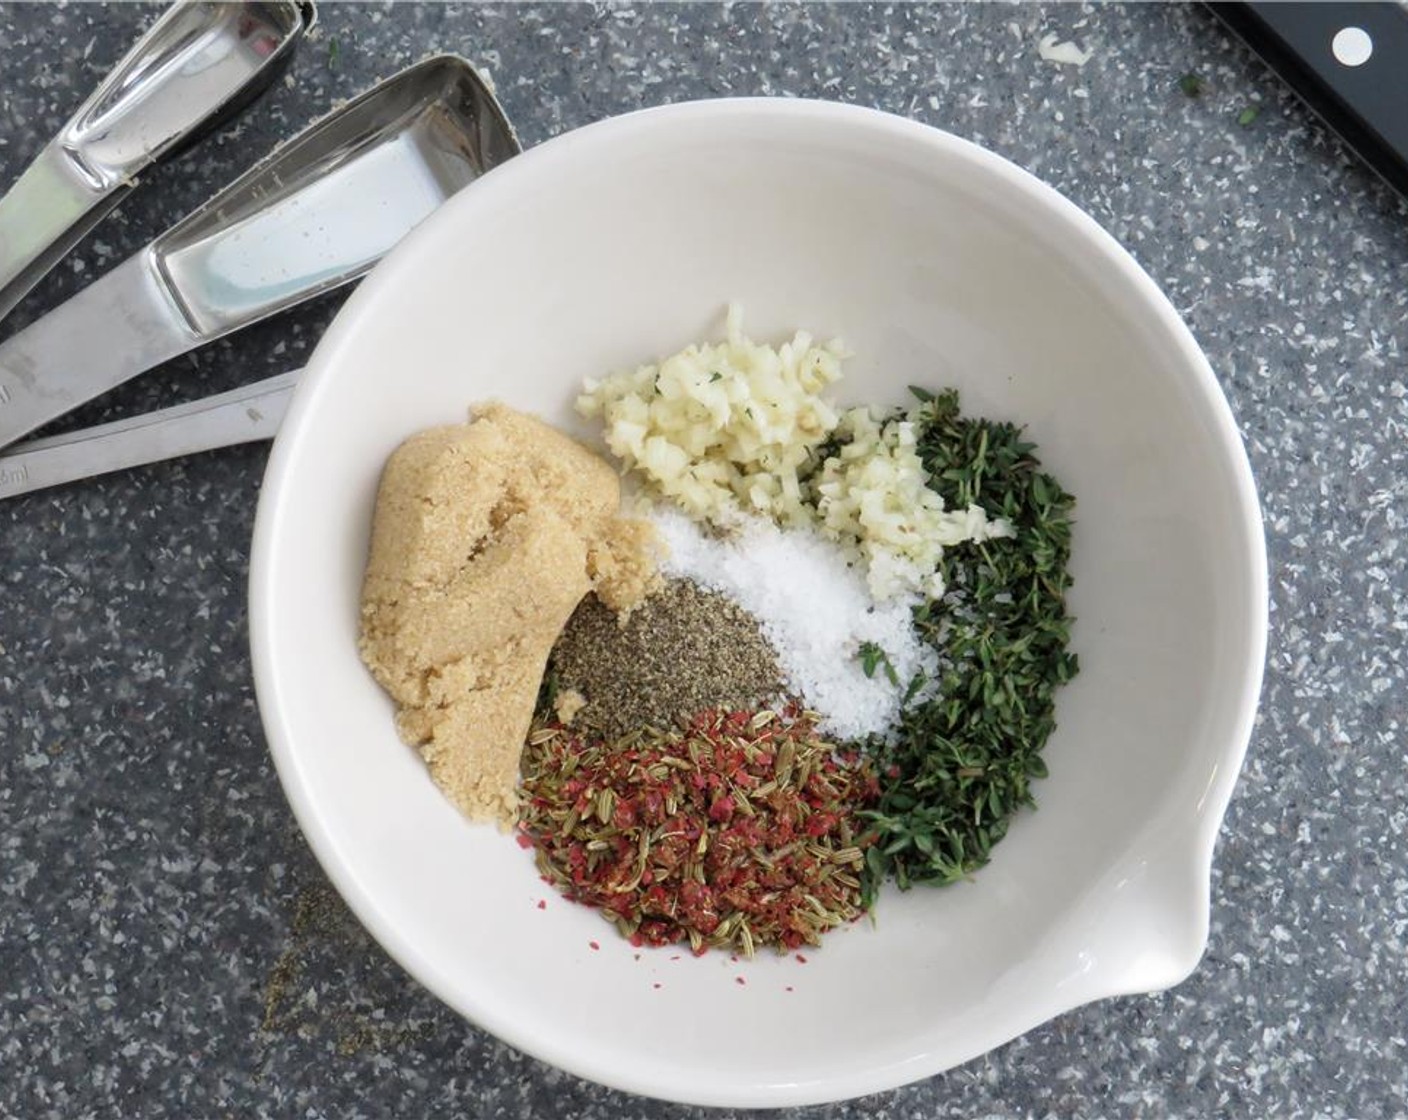 step 1 In a small bowl, combine the whole Red Peppercorns (1 tsp), Fennel Seeds (1 tsp), Ground Black Pepper (1 tsp), Kosher Salt (1 tsp), Fresh Rosemary (1 Tbsp), Fresh Thyme (1 Tbsp), Garlic (2 cloves), and Brown Sugar (1 1/2 Tbsp).